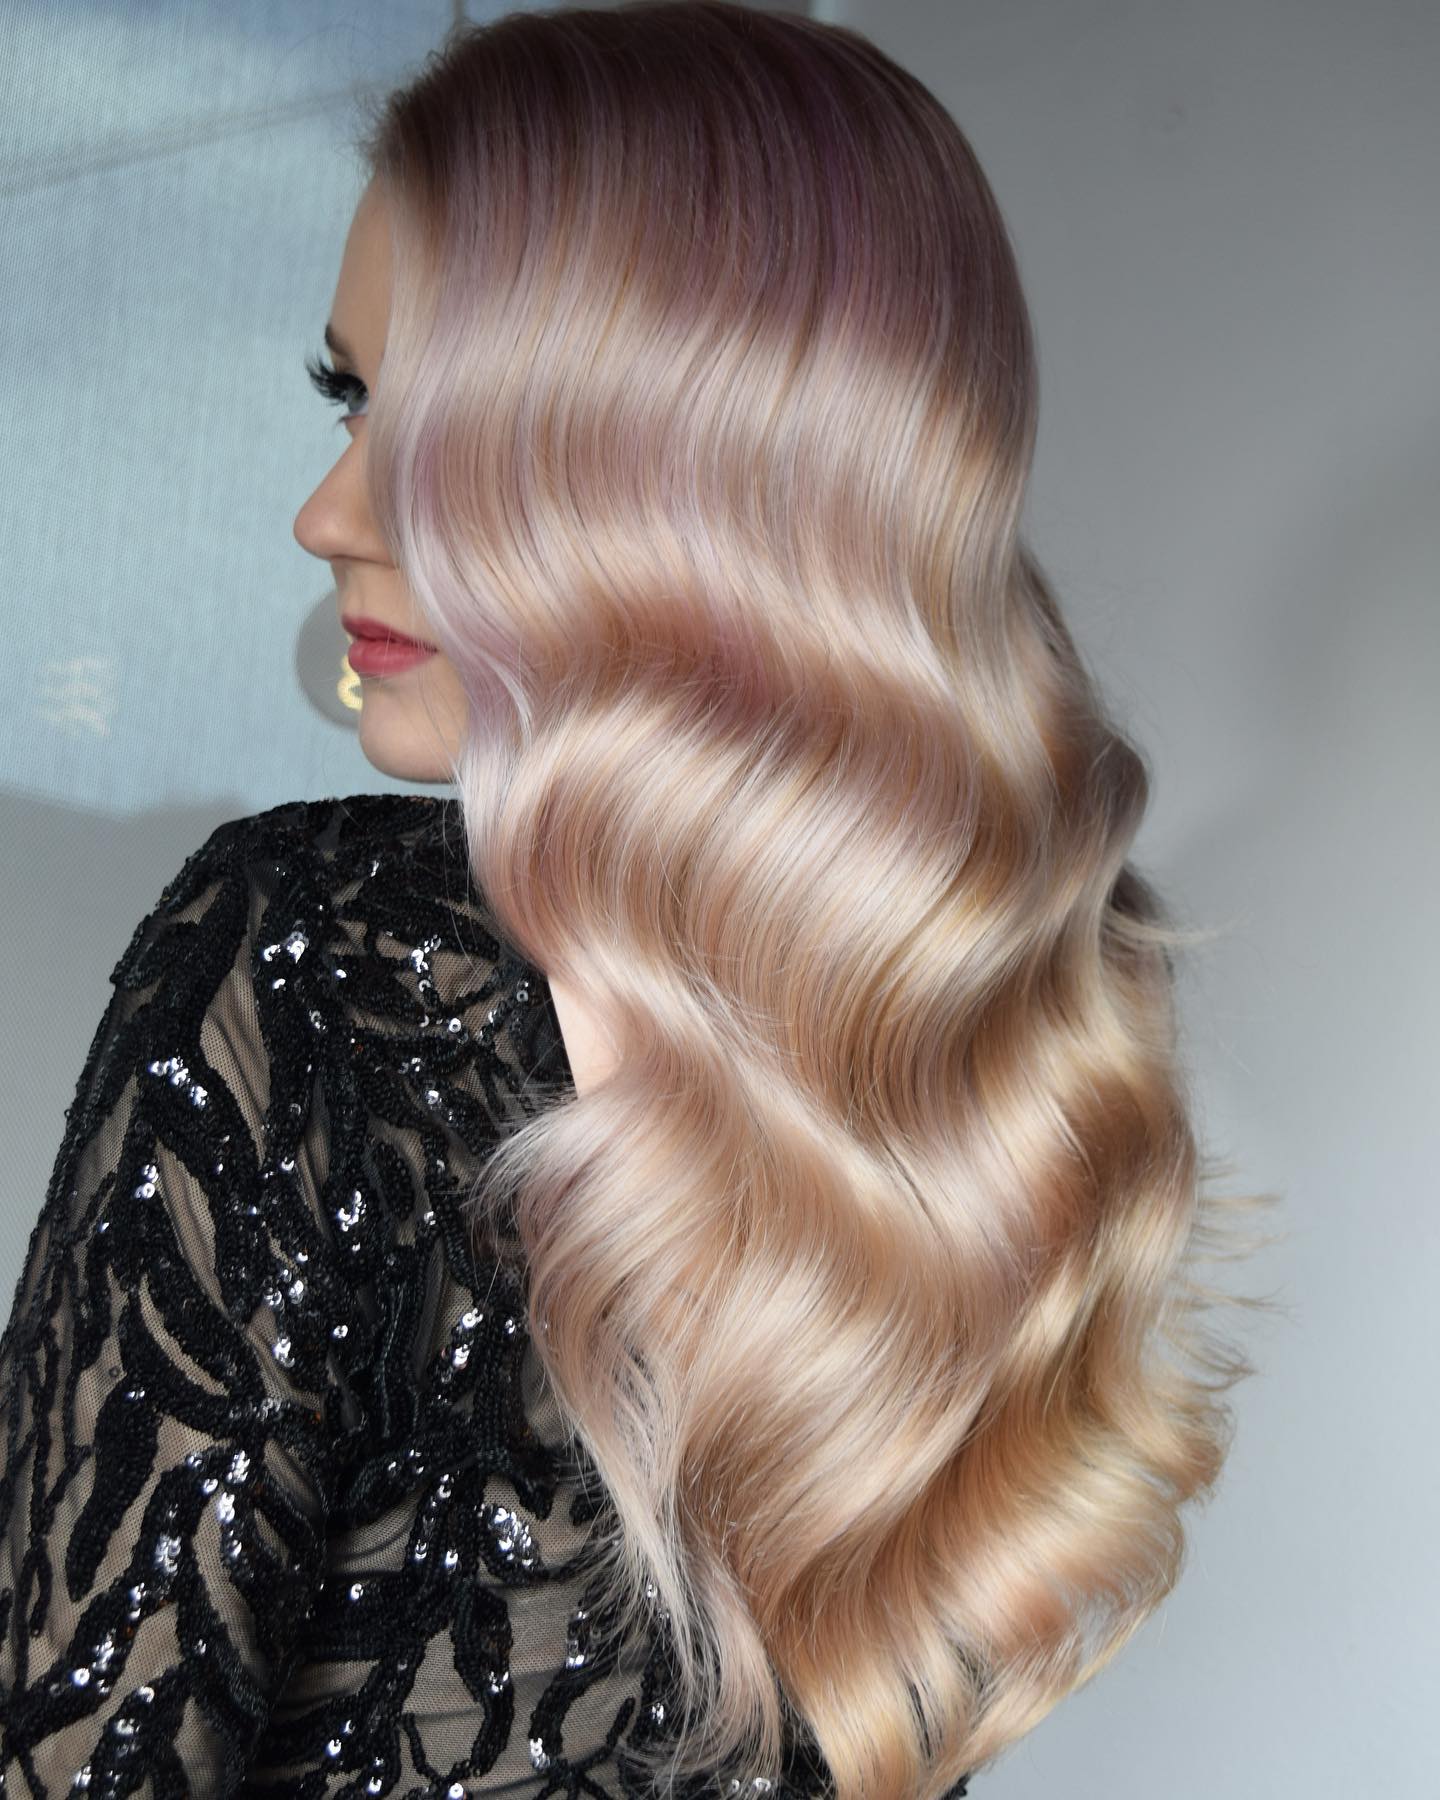 Blonde hair coloring: 30 bold, elegant options